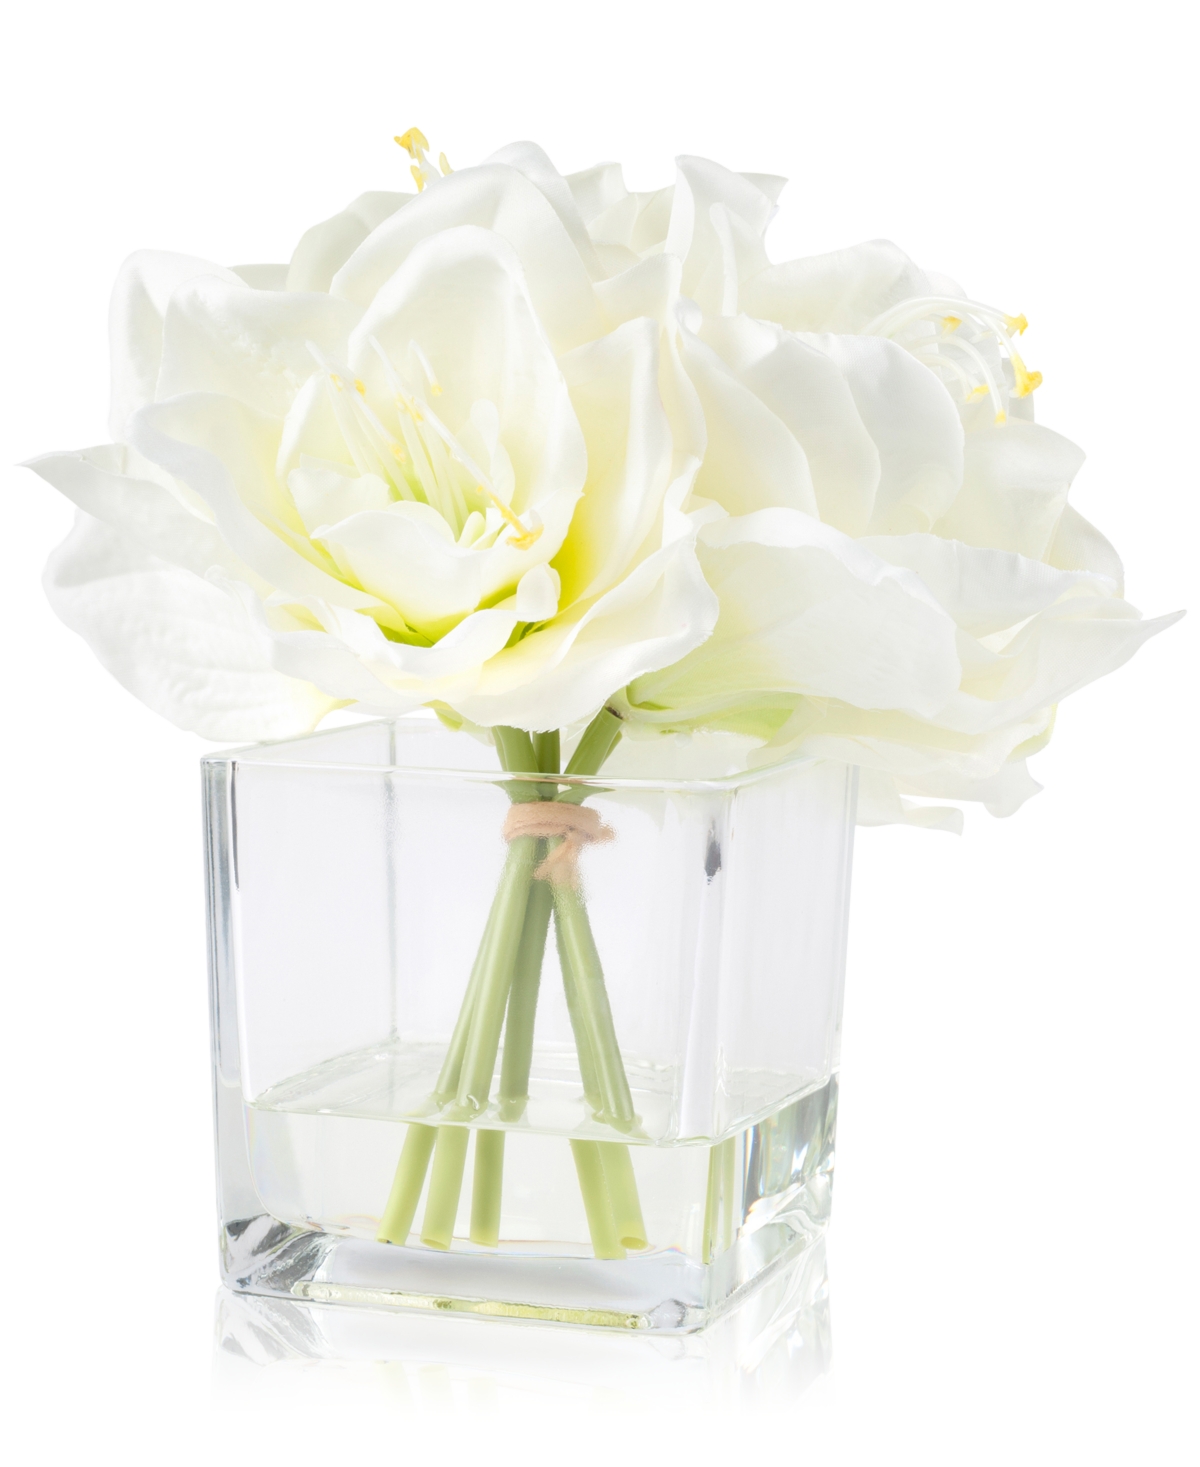 Pure Garden Cream Lily Floral Arrangement With Glass Vase, 8.5" x 7.5" x 7.5" - Multiple